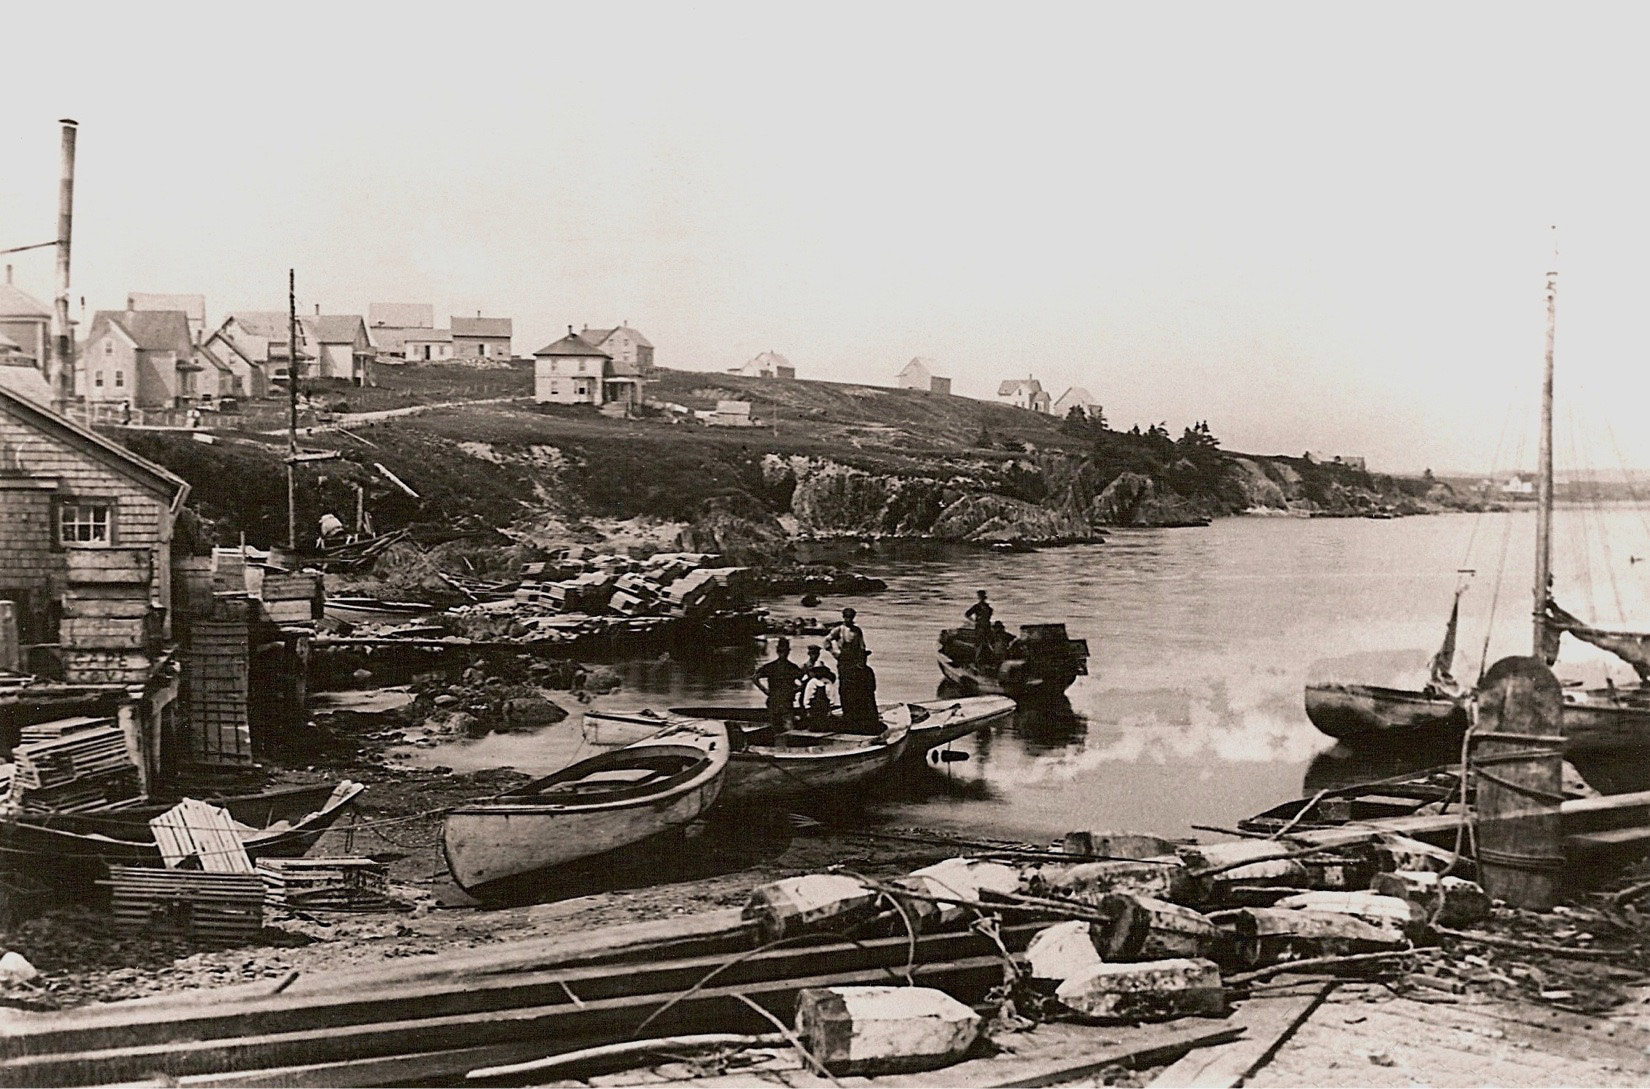 Cape Saint Mary circa 1897